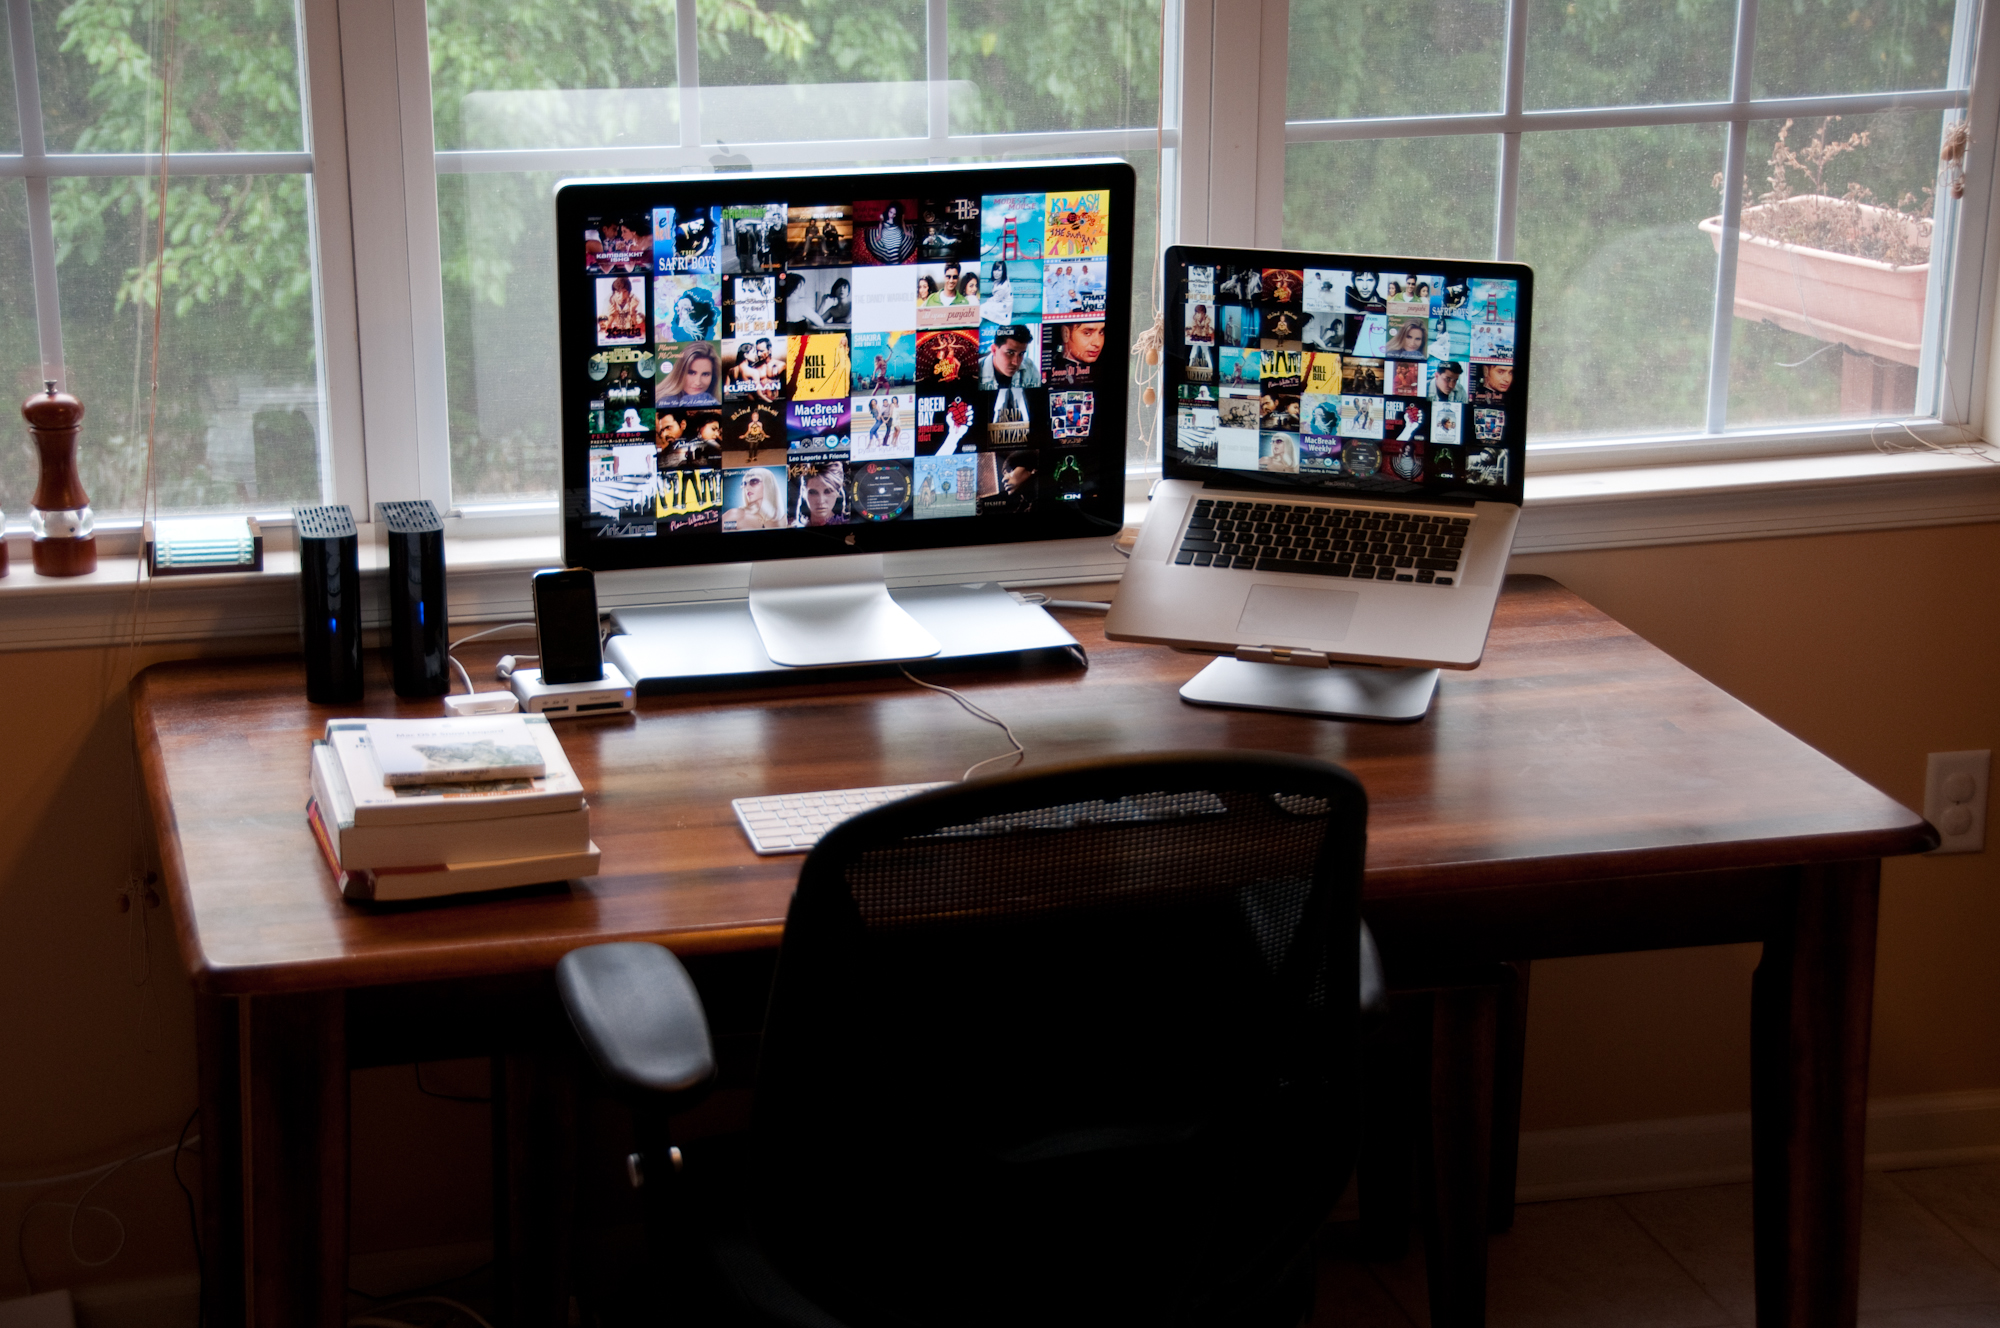 Workspace Computer Apple Inc Mac OS X MacBook Imac Desk Office 2000x1328